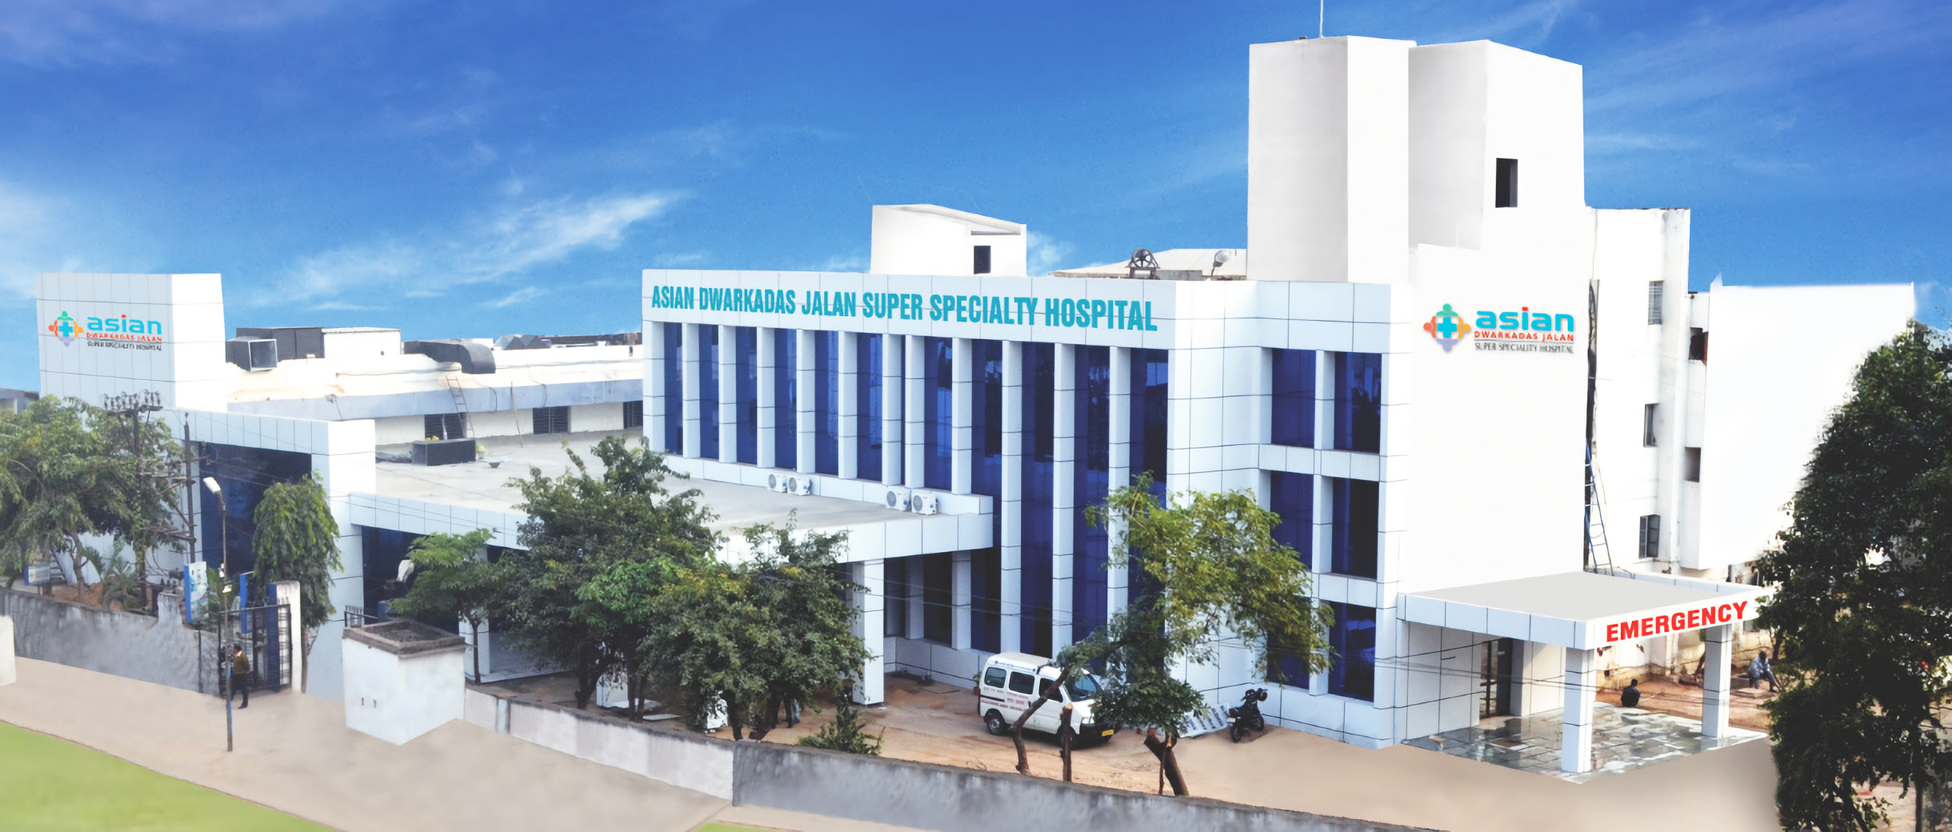 Asian Dwarkadas Jalan Super Specialty Hospital